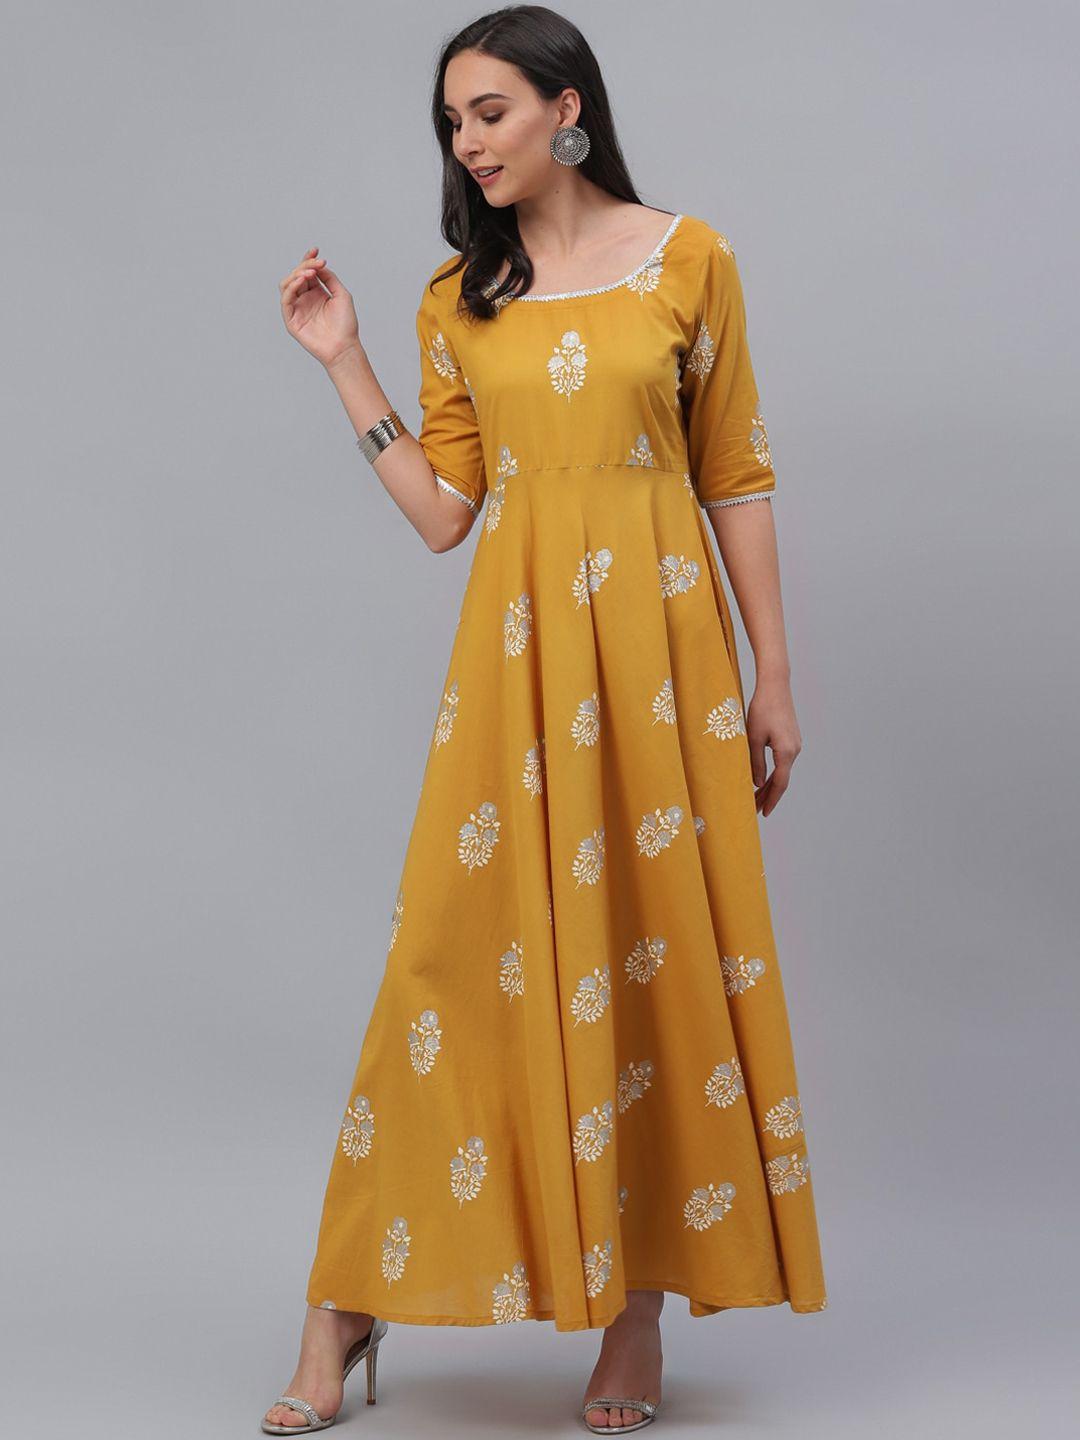 gerua-women-yellow-floral-printed-maxi-dress